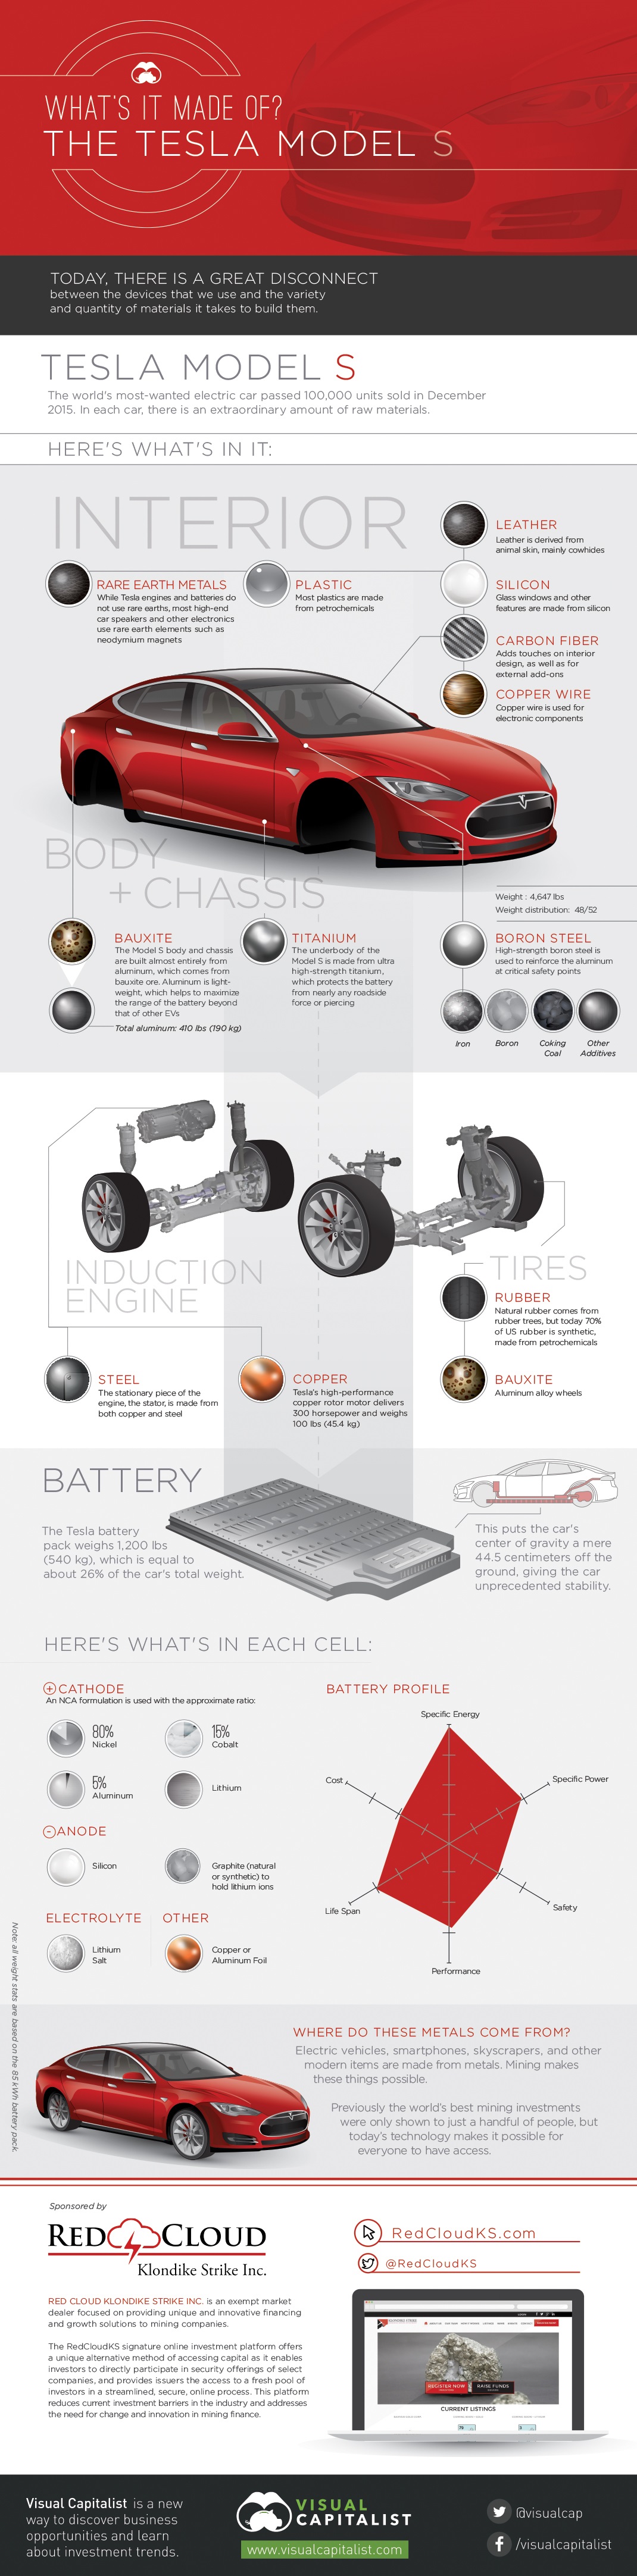 Infografik Rohstoffe im Elektroauto Tesla Model S (85). Bildquelle: http://www.visualcapitalist.com/